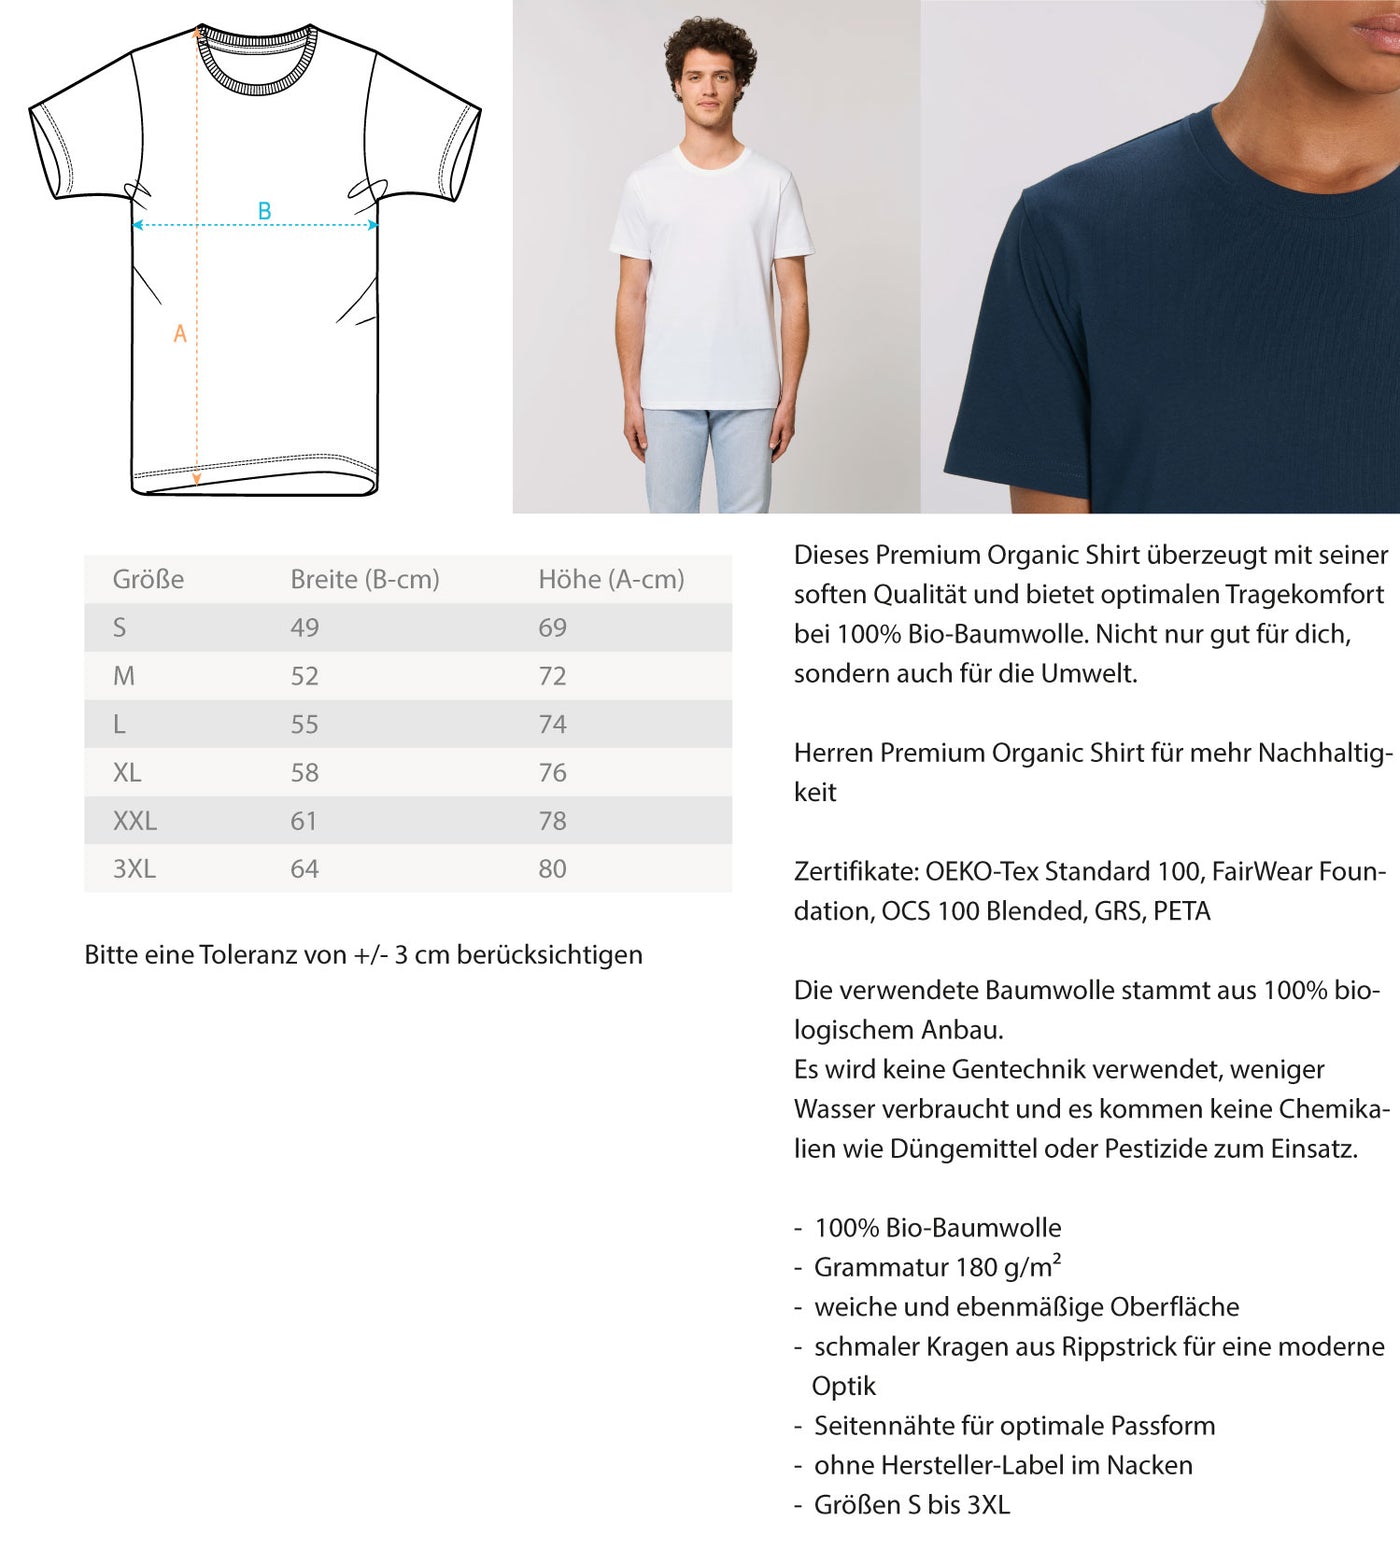 Herzschlag Bergsteiger - Herren Premium Organic T-Shirt klettern